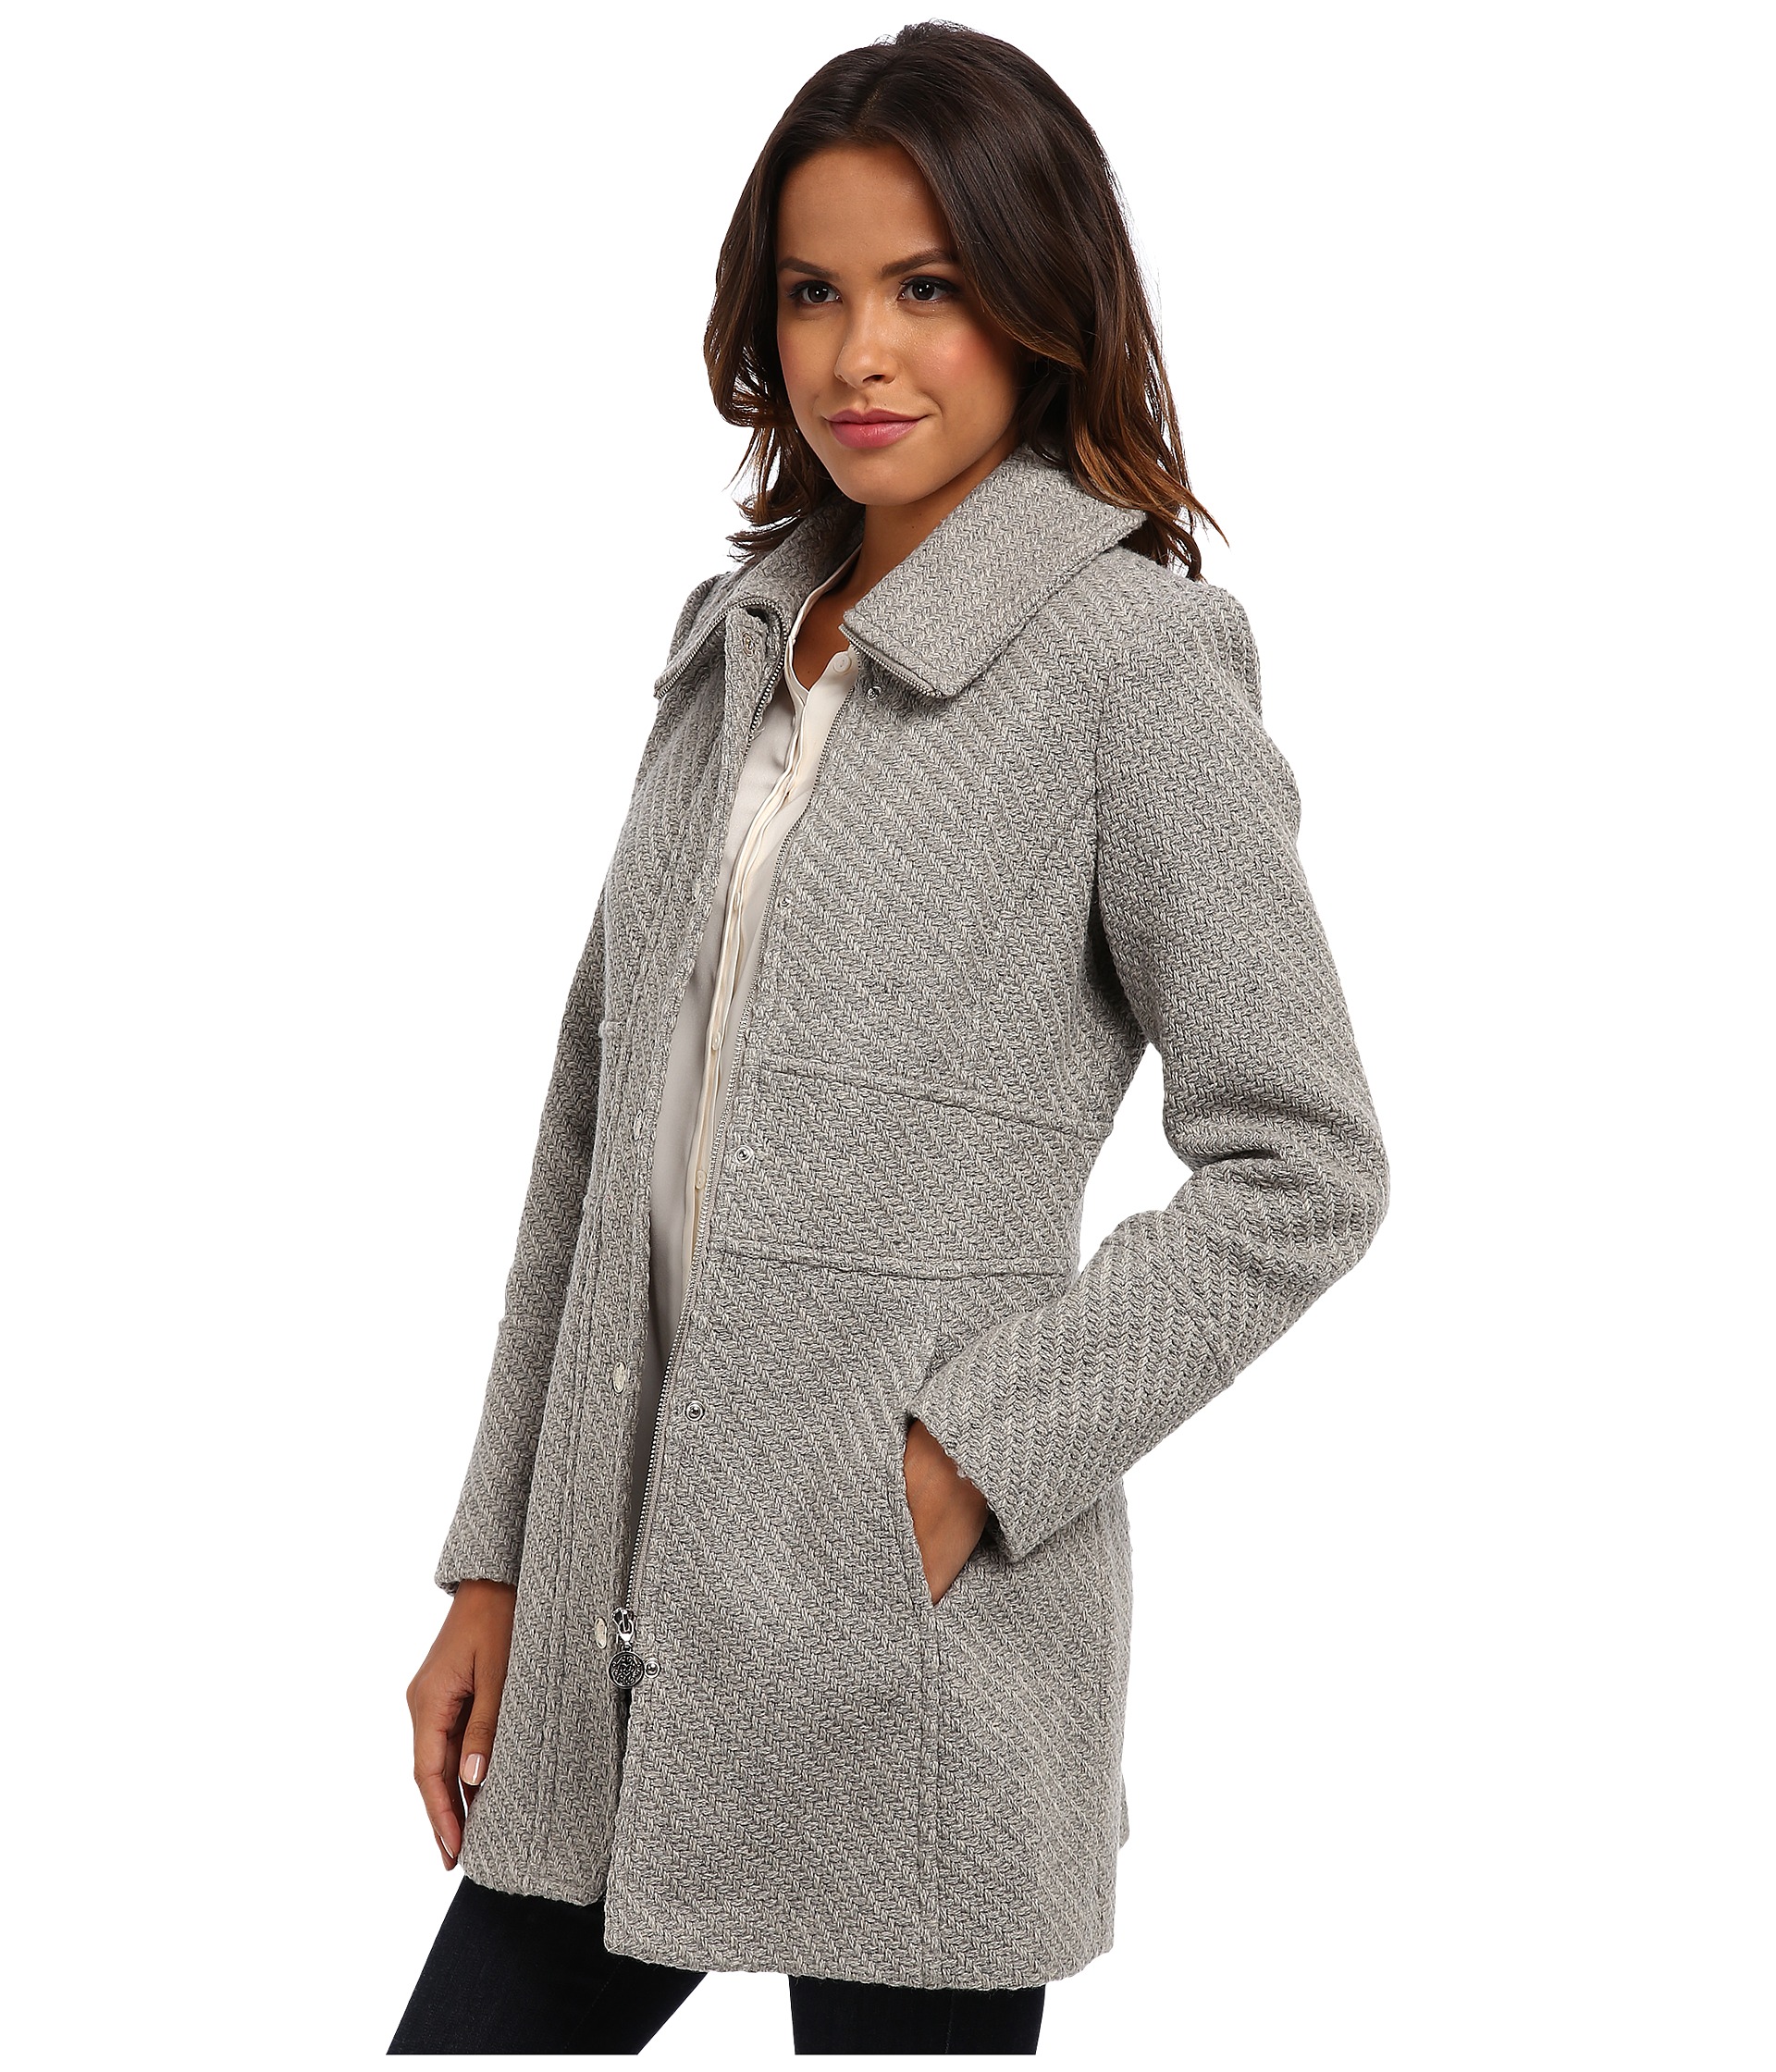 Jessica Simpson Jofmh502 Coat, Clothing, Women | Shipped Free at Zappos1920 x 2240